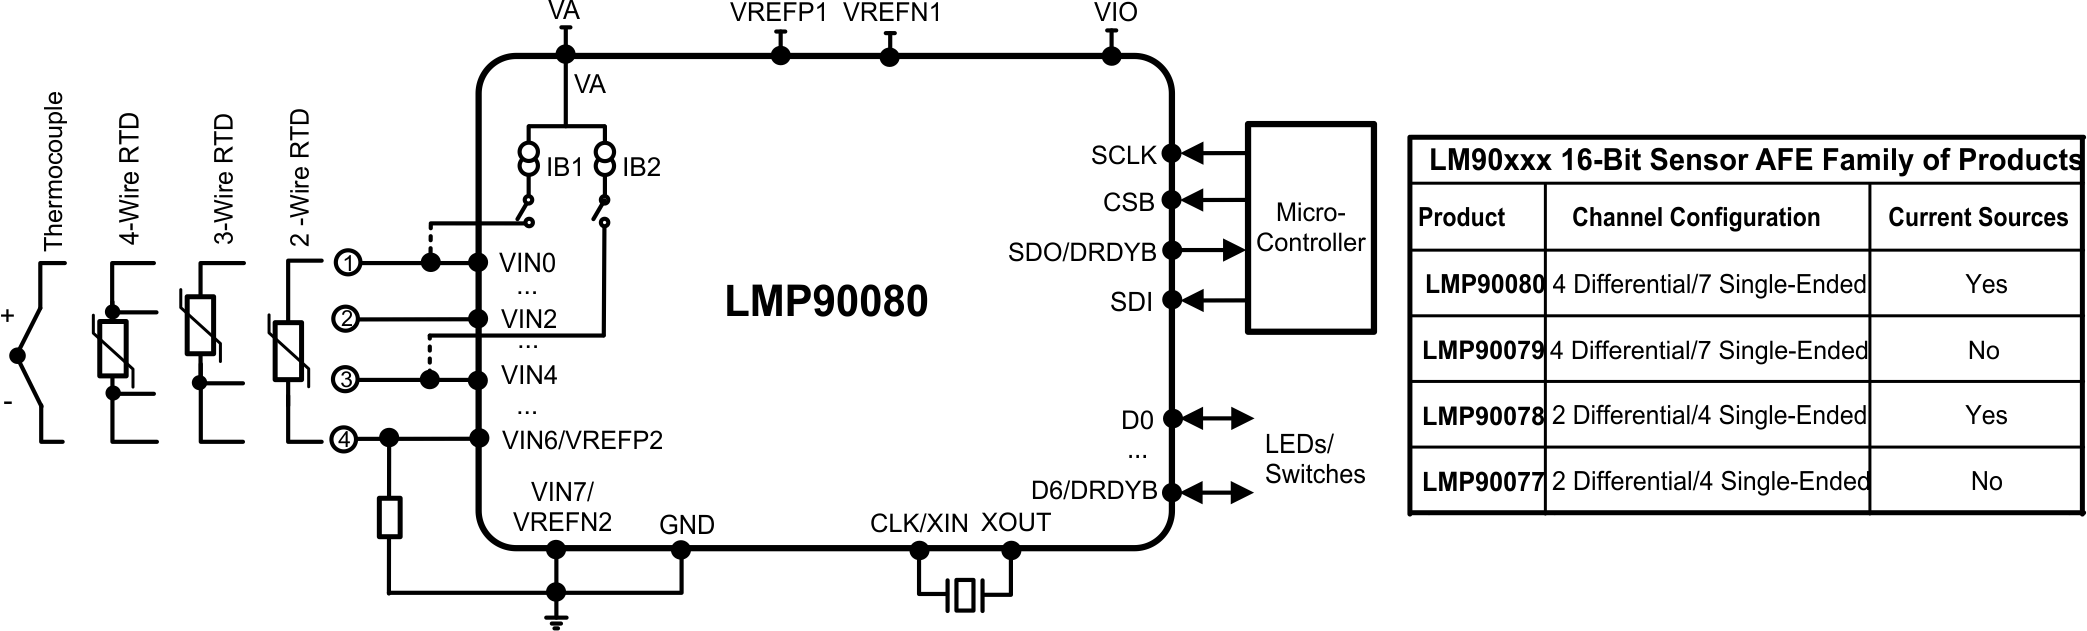 LMP90077 LMP90078 LMP90079 LMP90080 30169774.gif